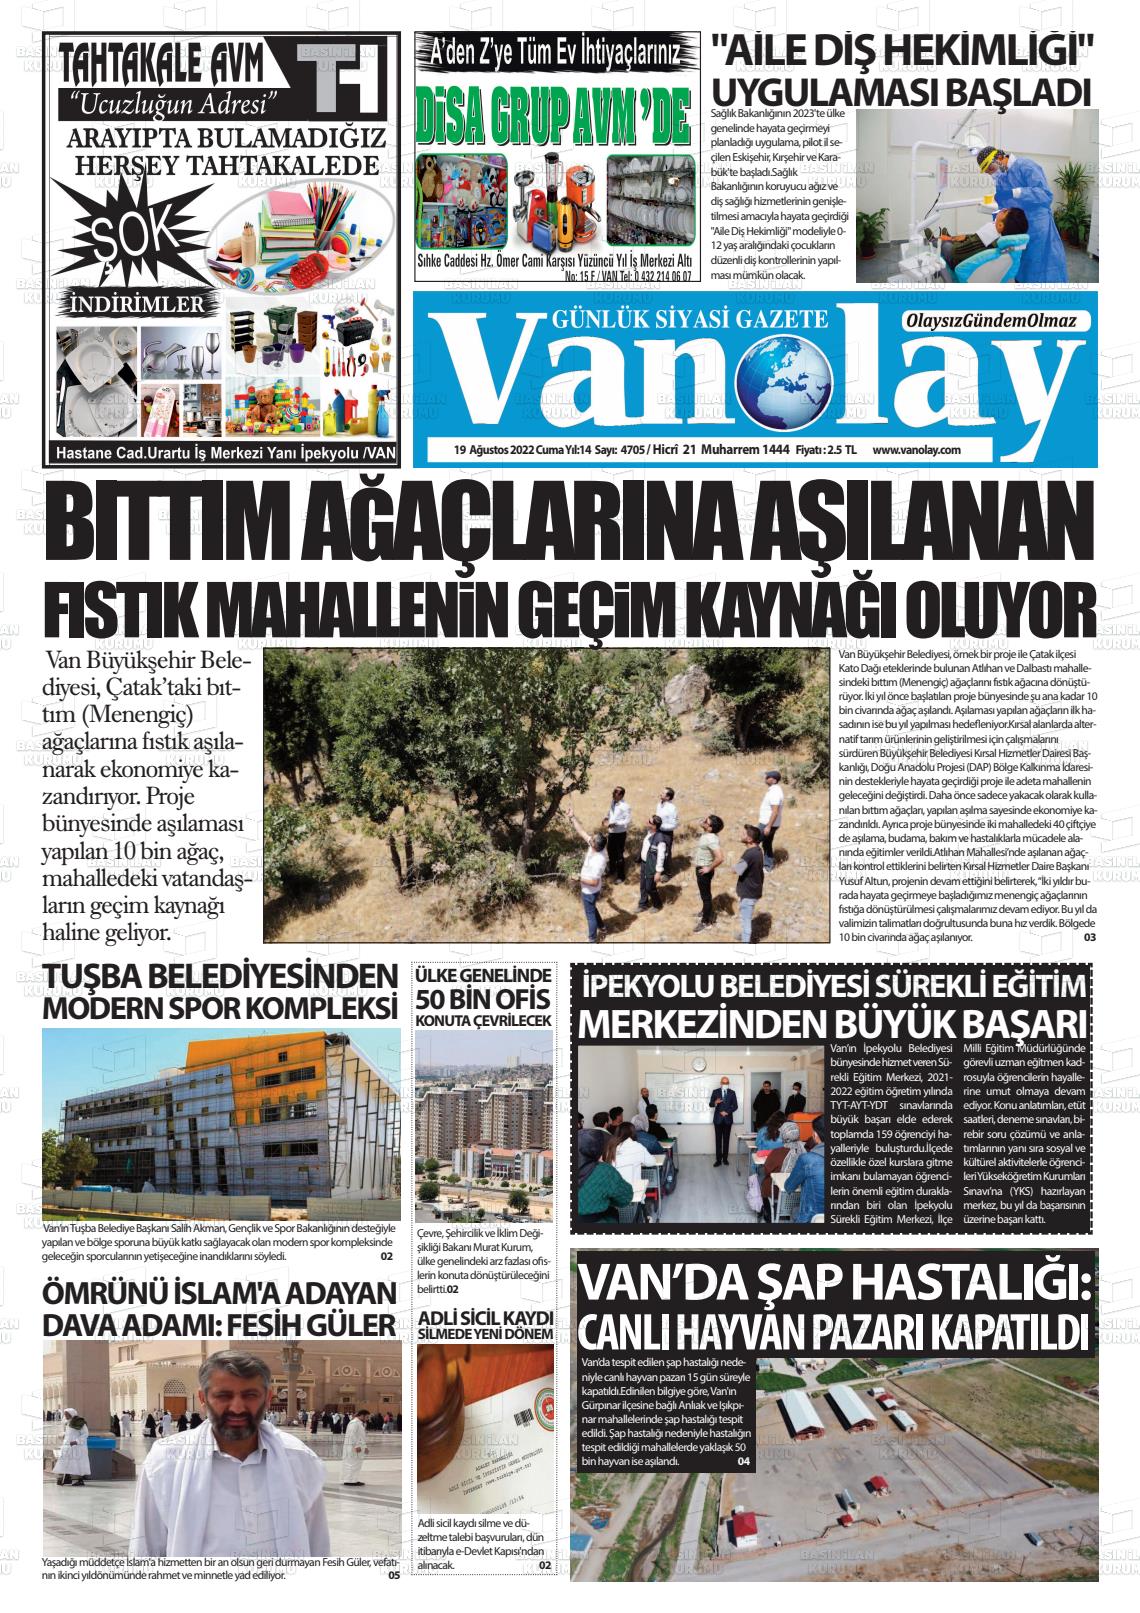 19 Ağustos 2022 Van Olay Gazete Manşeti